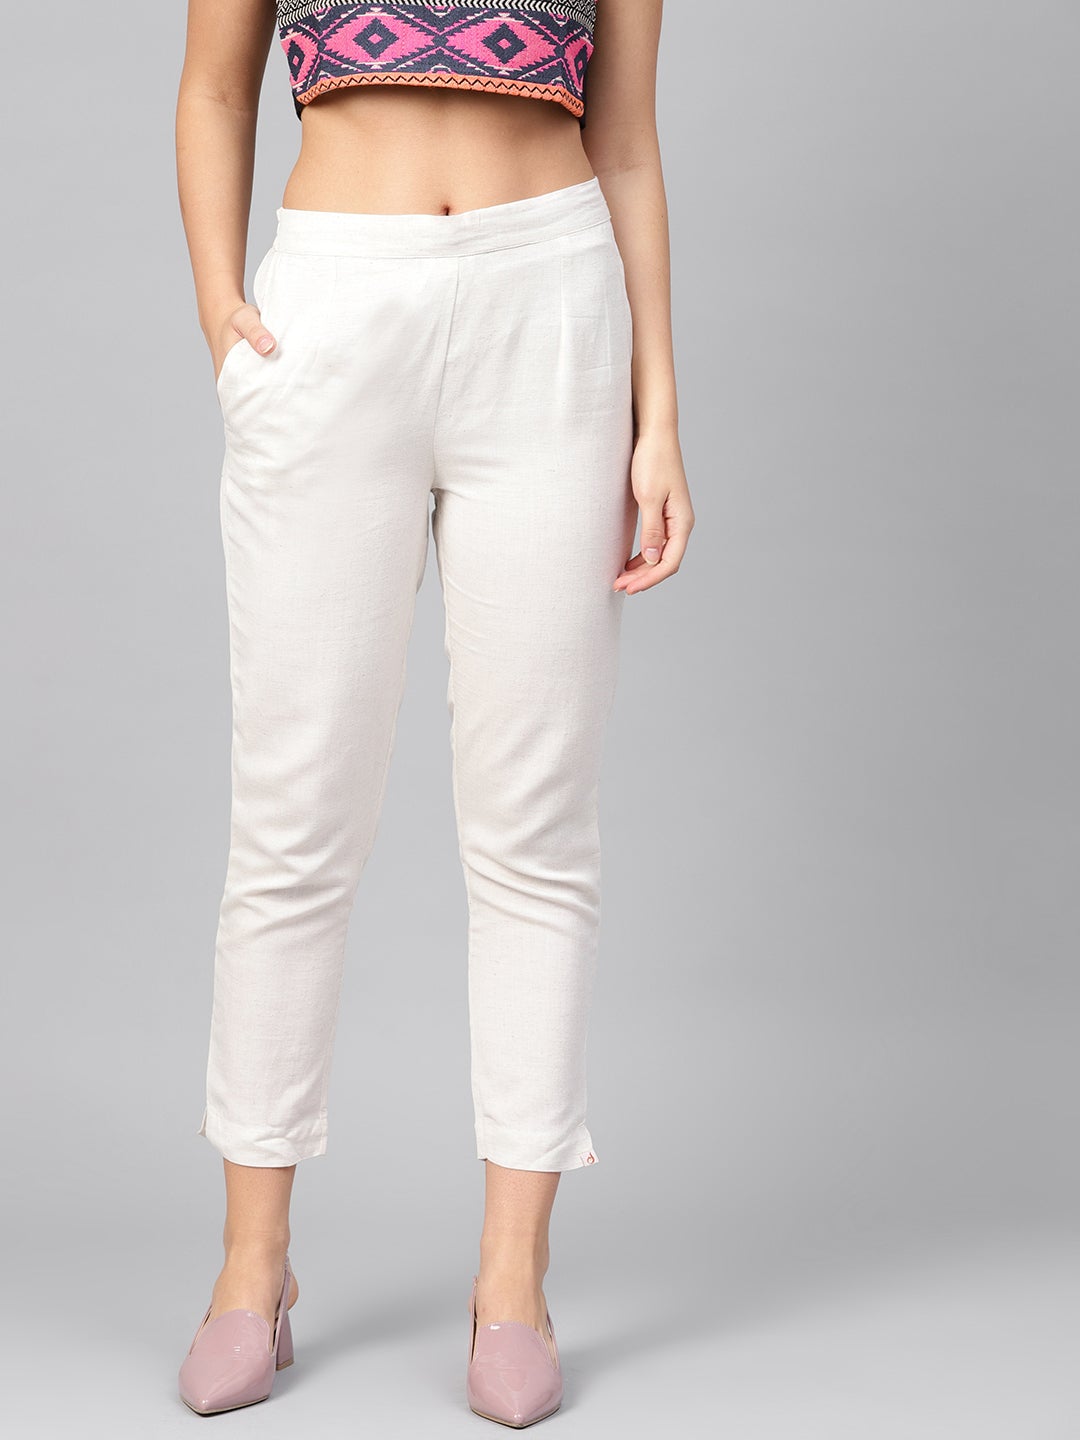 Ivory Rayon Flex Solid Slim Fit Pant/Slim Pant